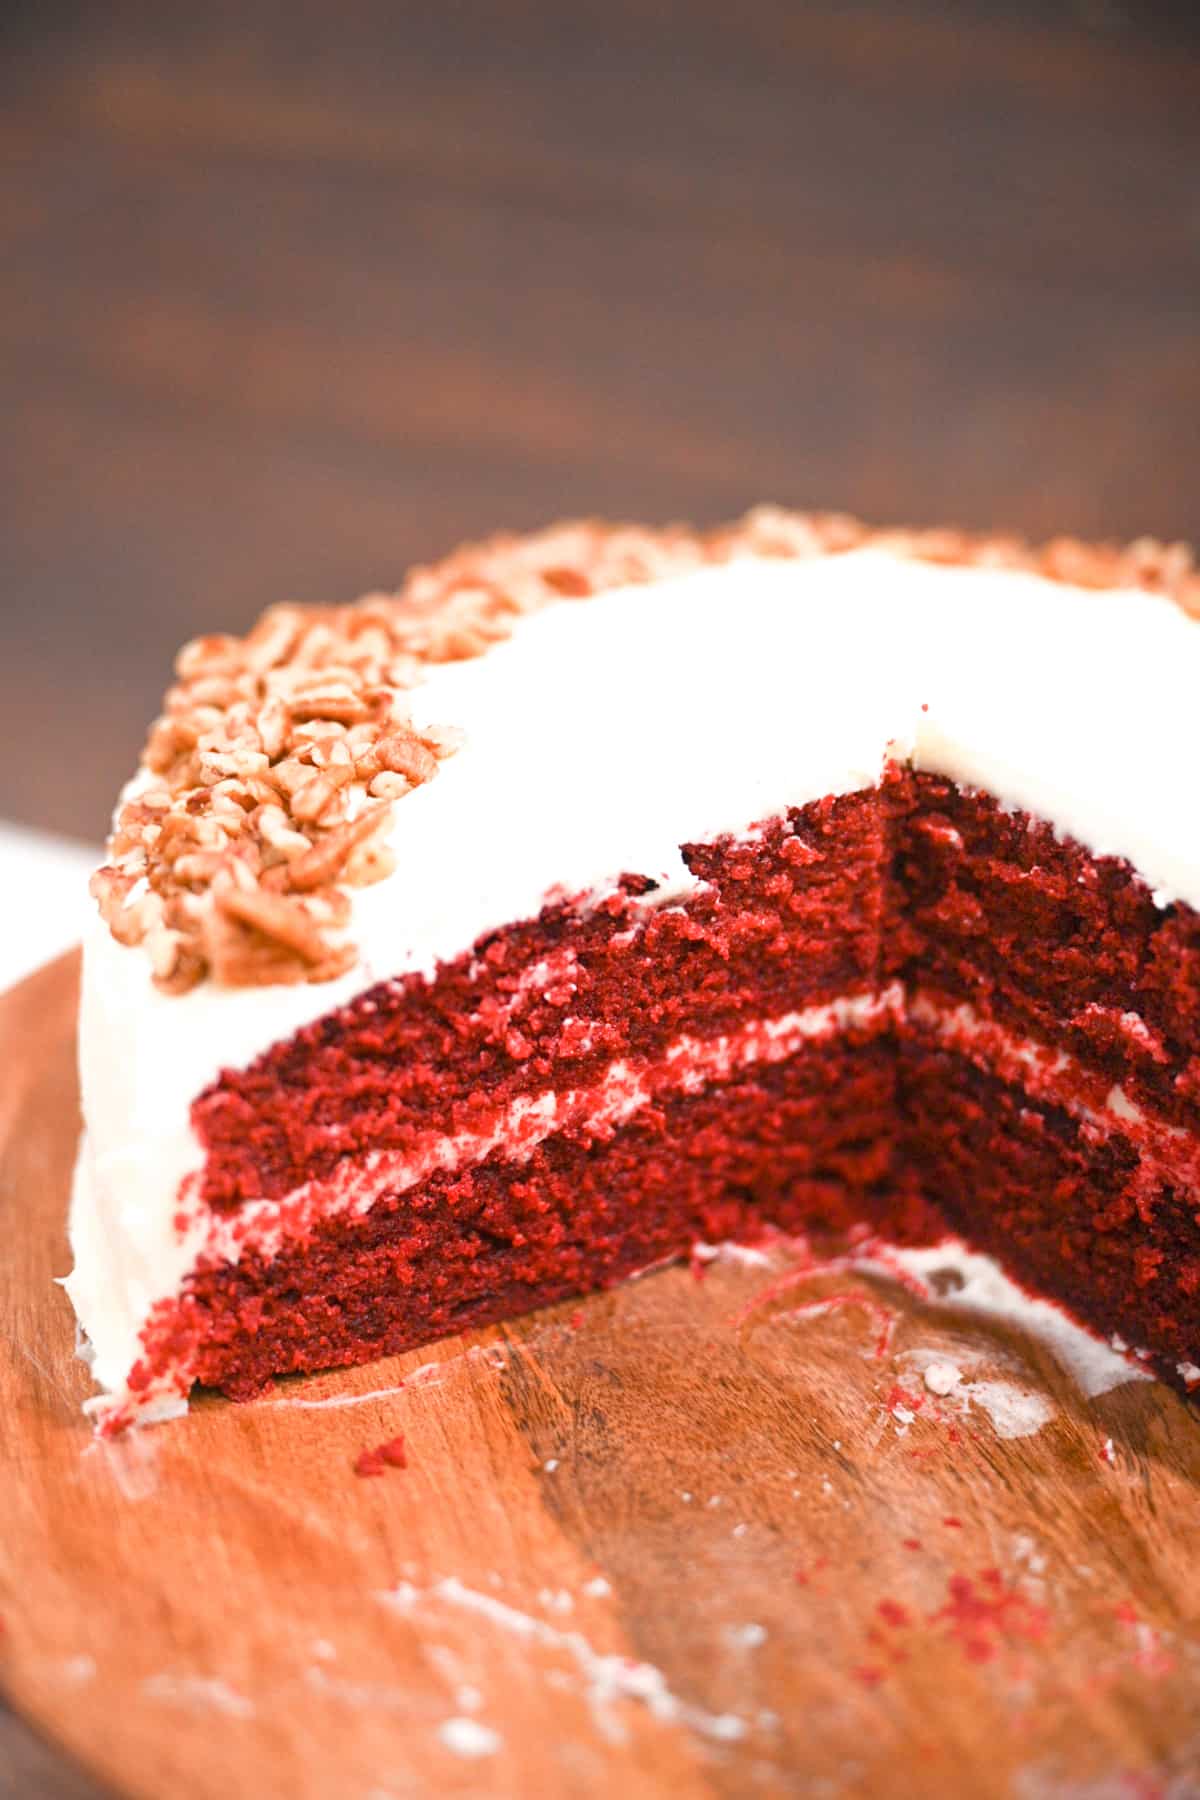 Image of whole red velvet cake partially sliced.